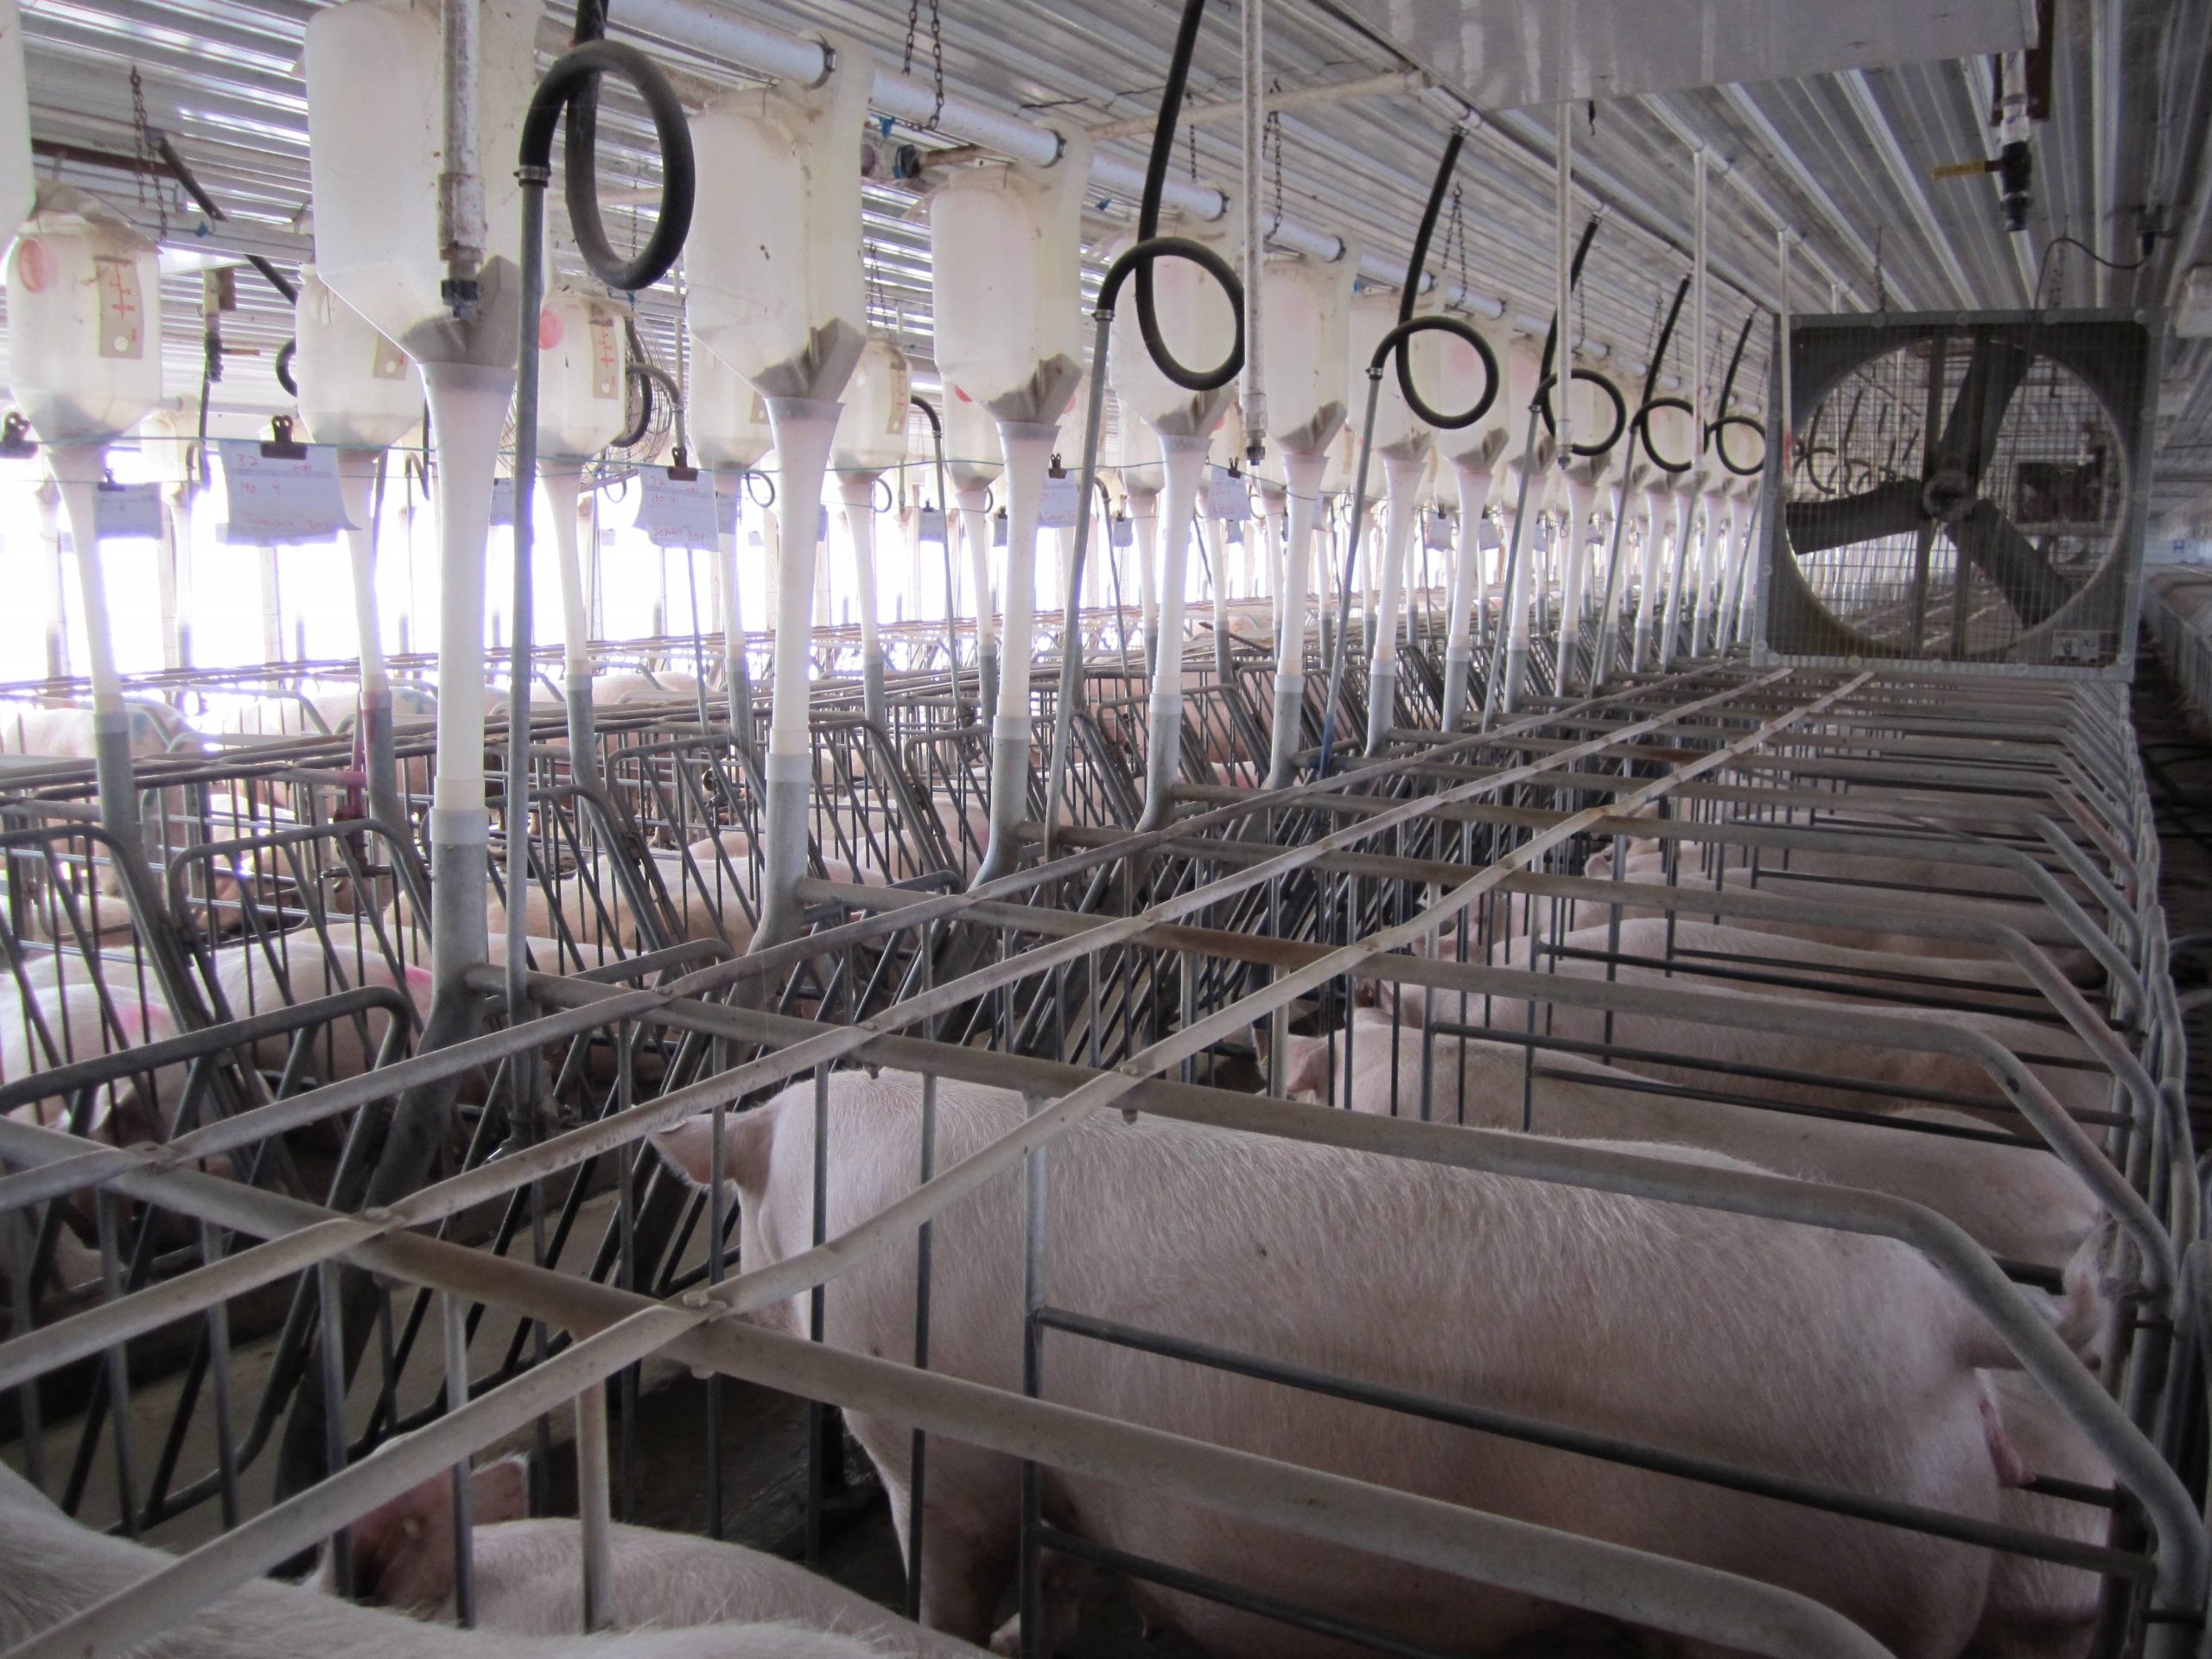 Breeding pigs in tight pens inside a pork plant